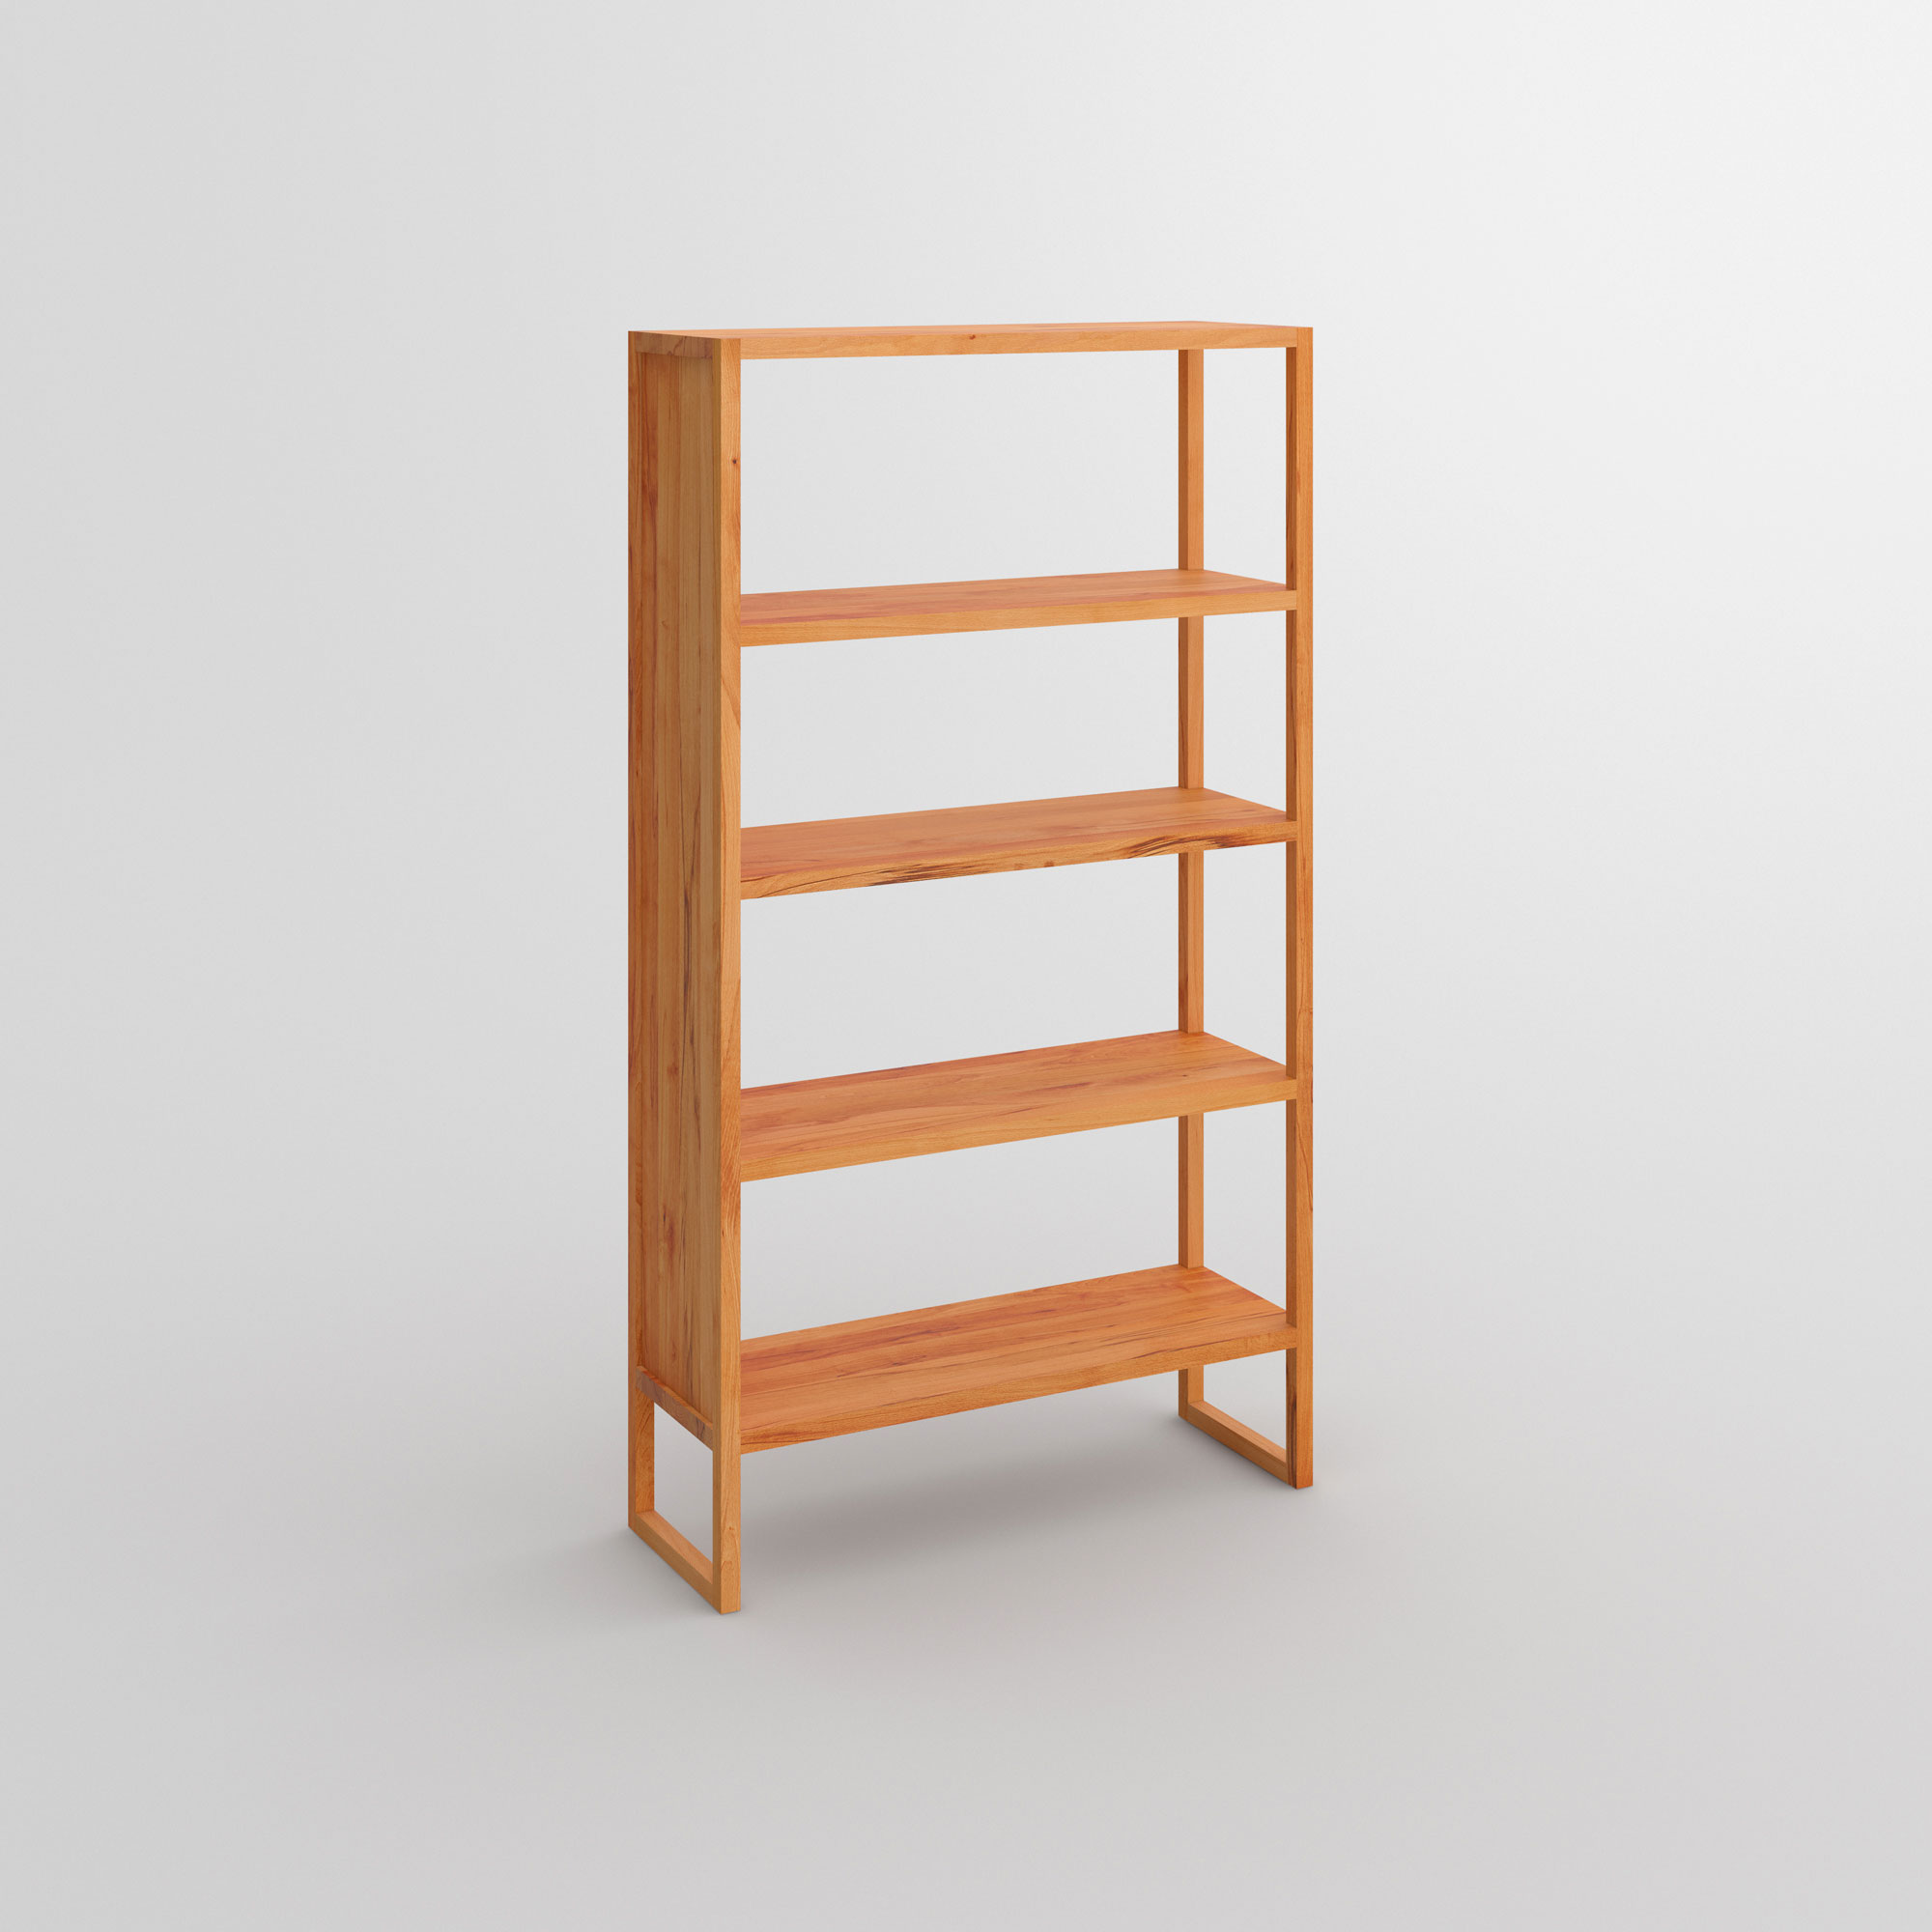 Linoleum Wood Shelf SENA cam1 custom made in solid wood by vitamin design